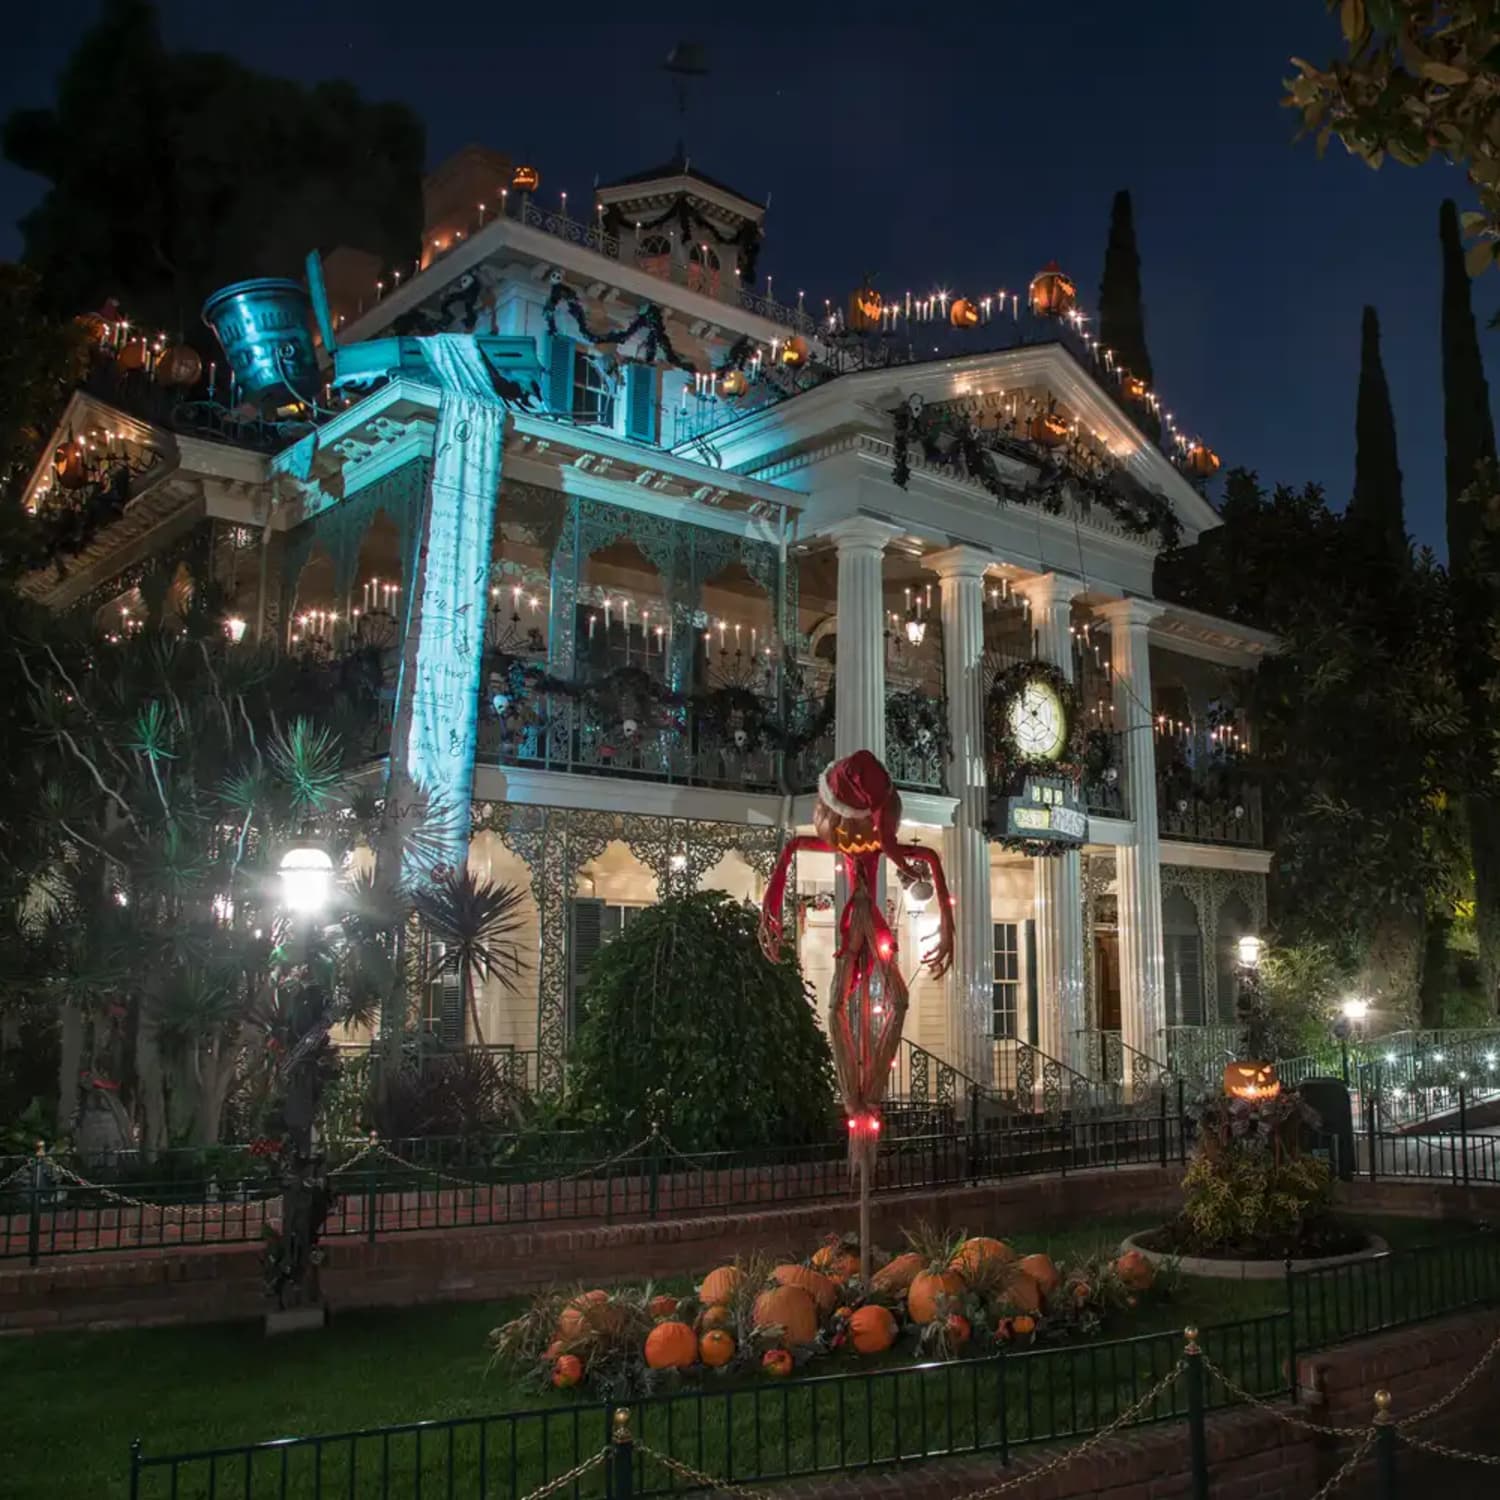 Thiết kế haunted mansion halloween decorations đầy kinh dị cho lễ hội Halloween